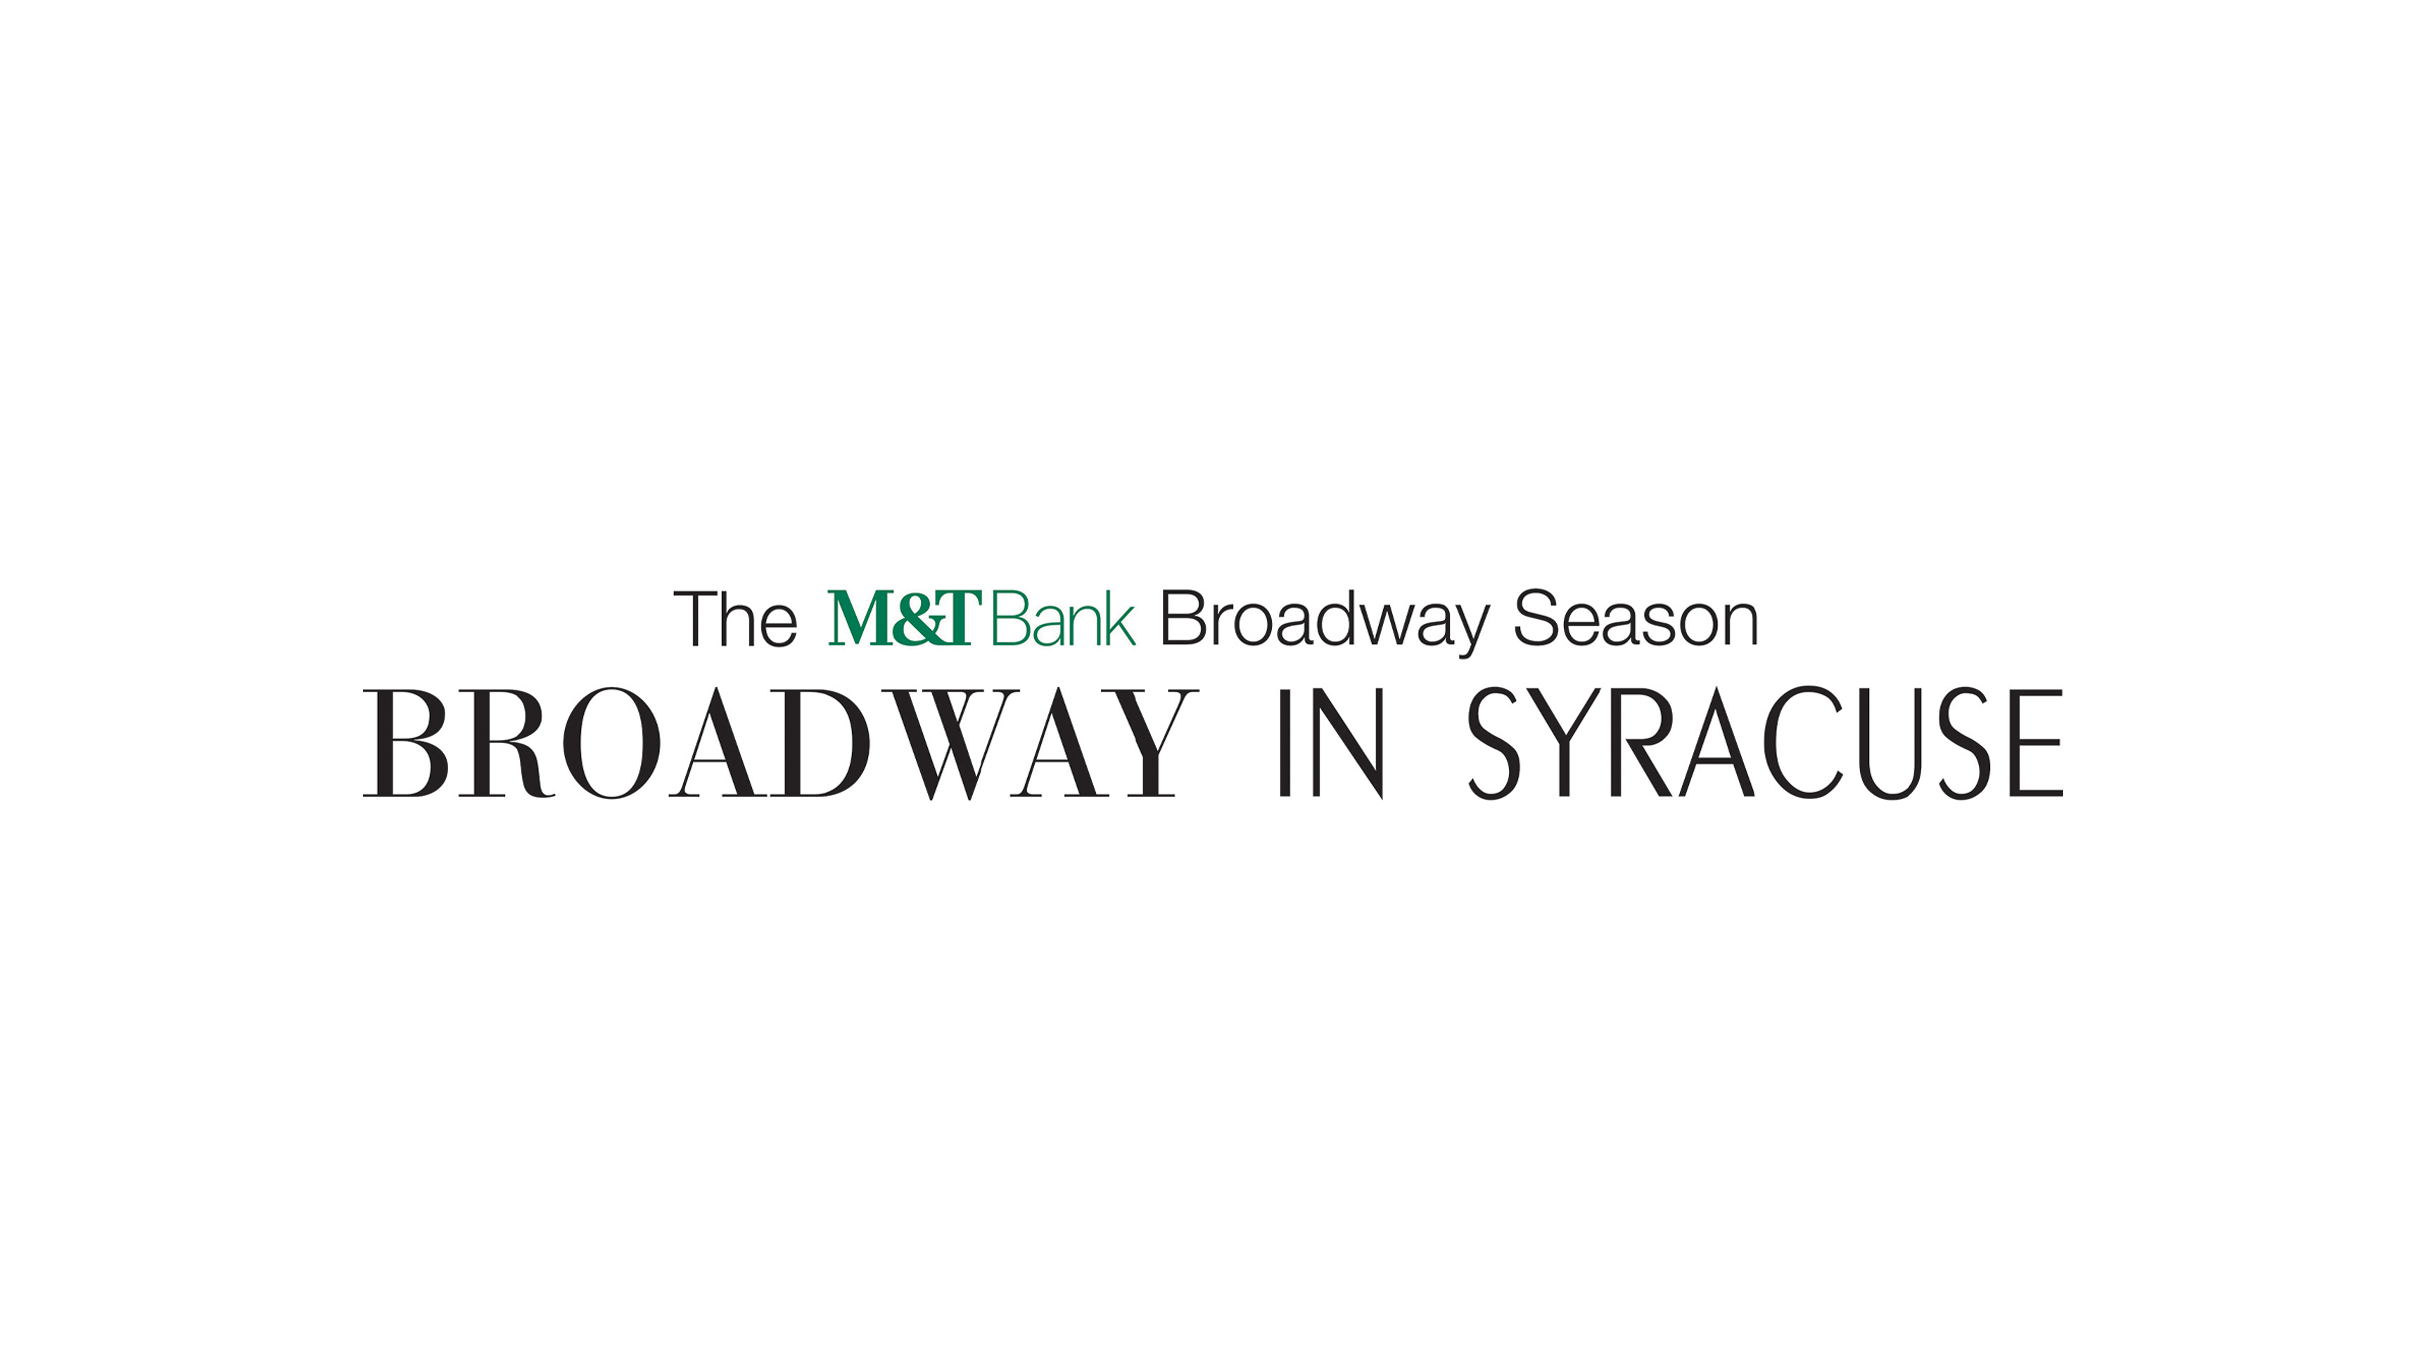 Broadway In Syracuse Season Tickets: Tuesday Evening